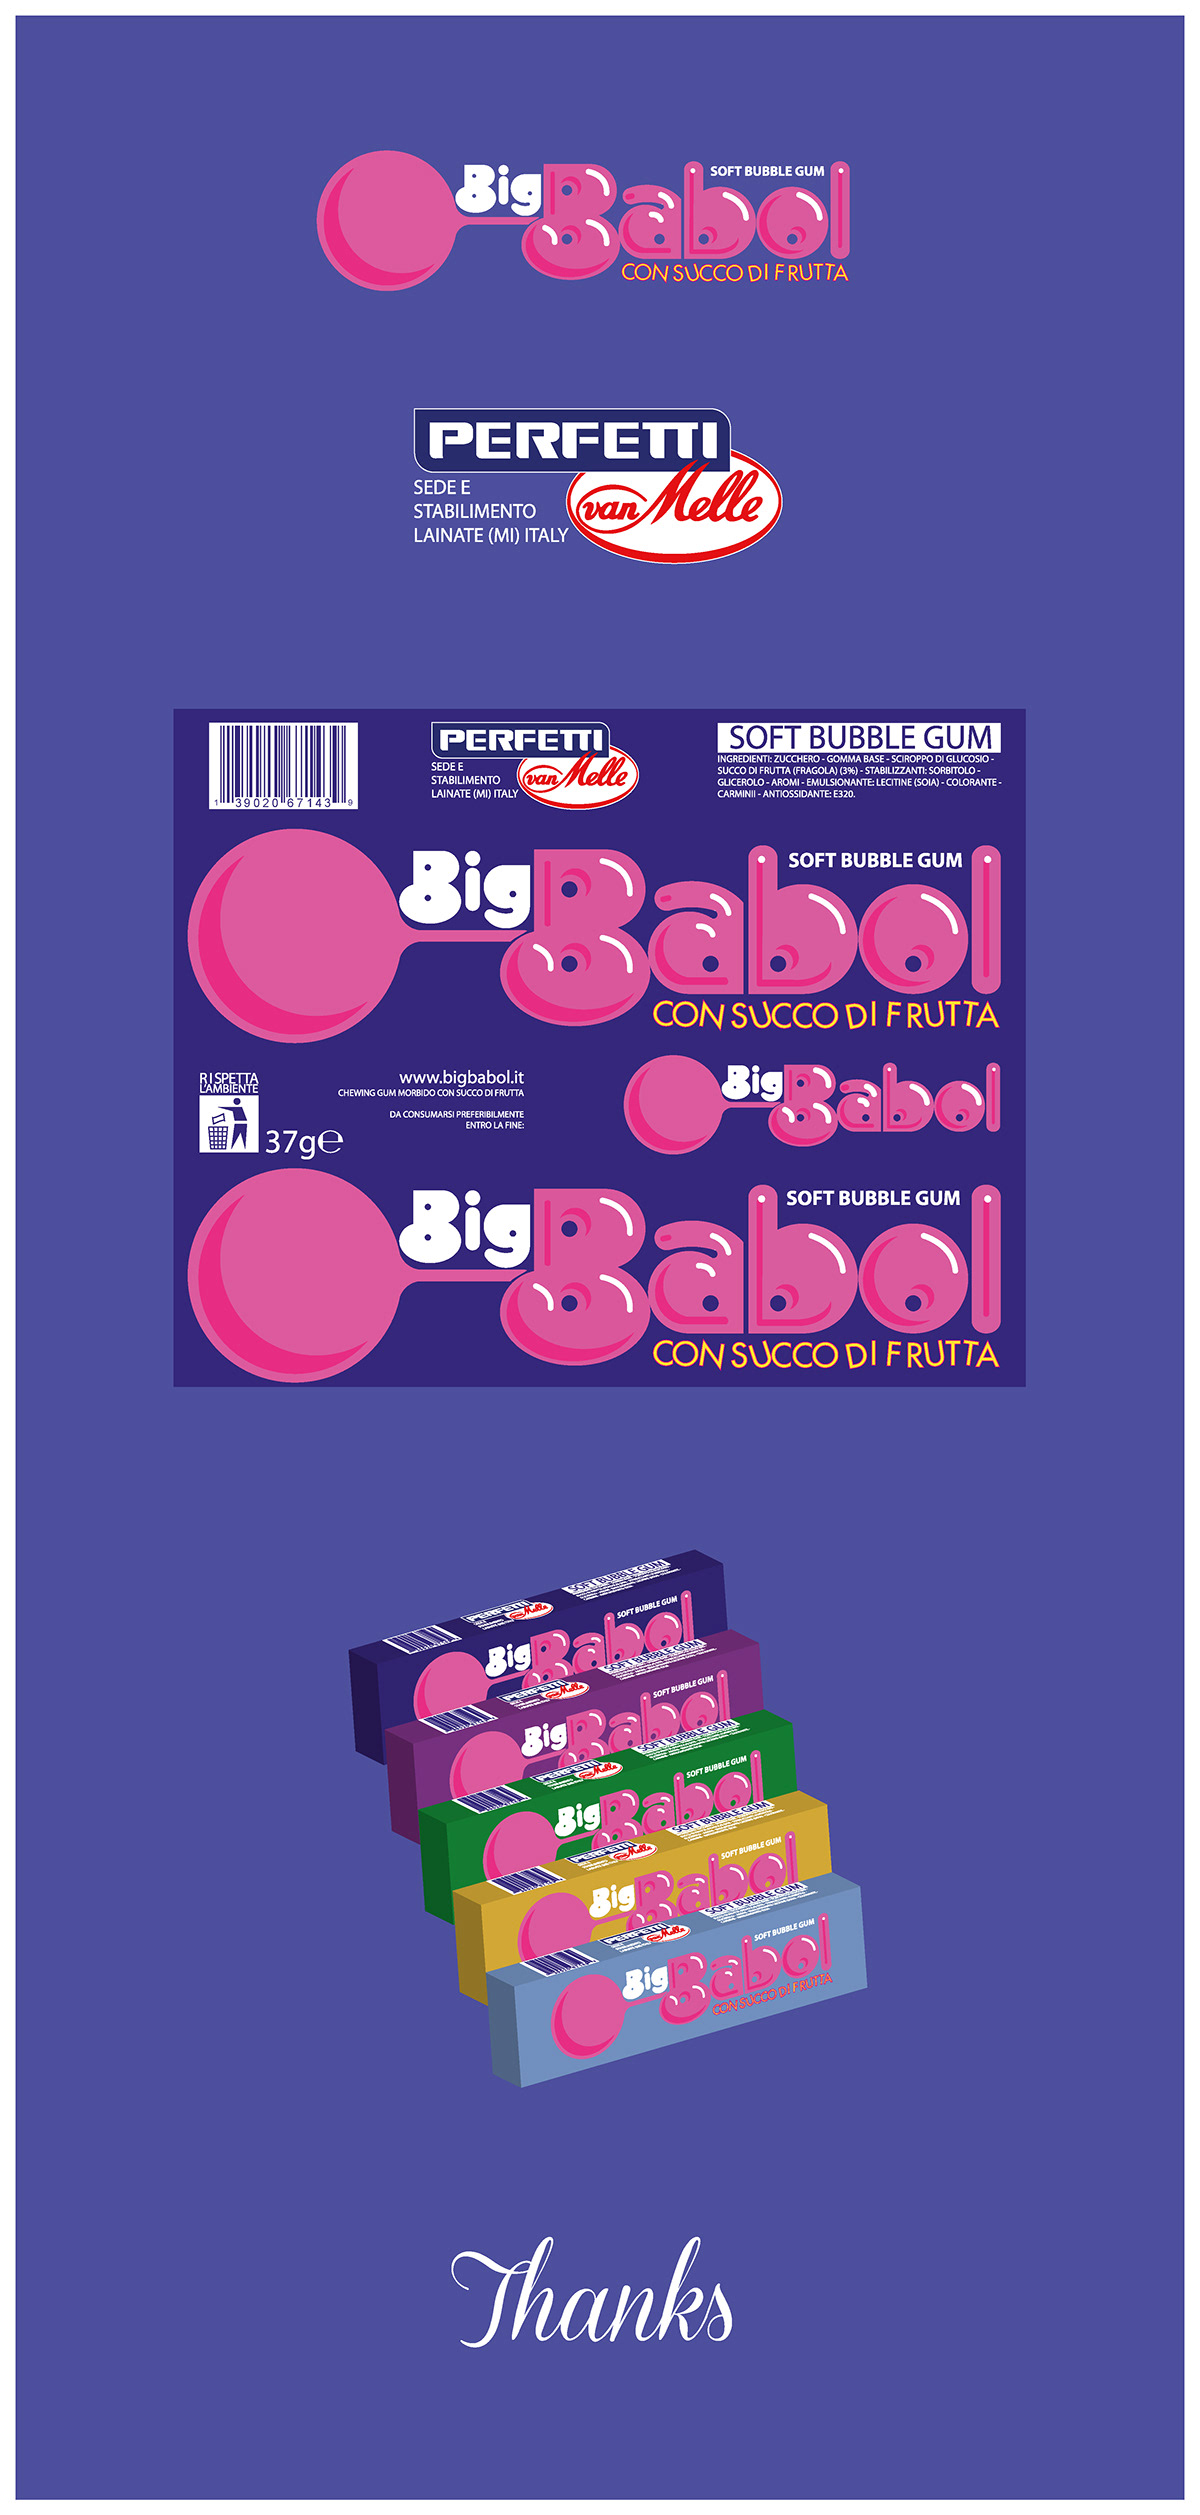 #ai #illustrator #adobe #cs6 #Mac #illustration #illustrazione #bigbabol #cicca #graphicDesign #packaging